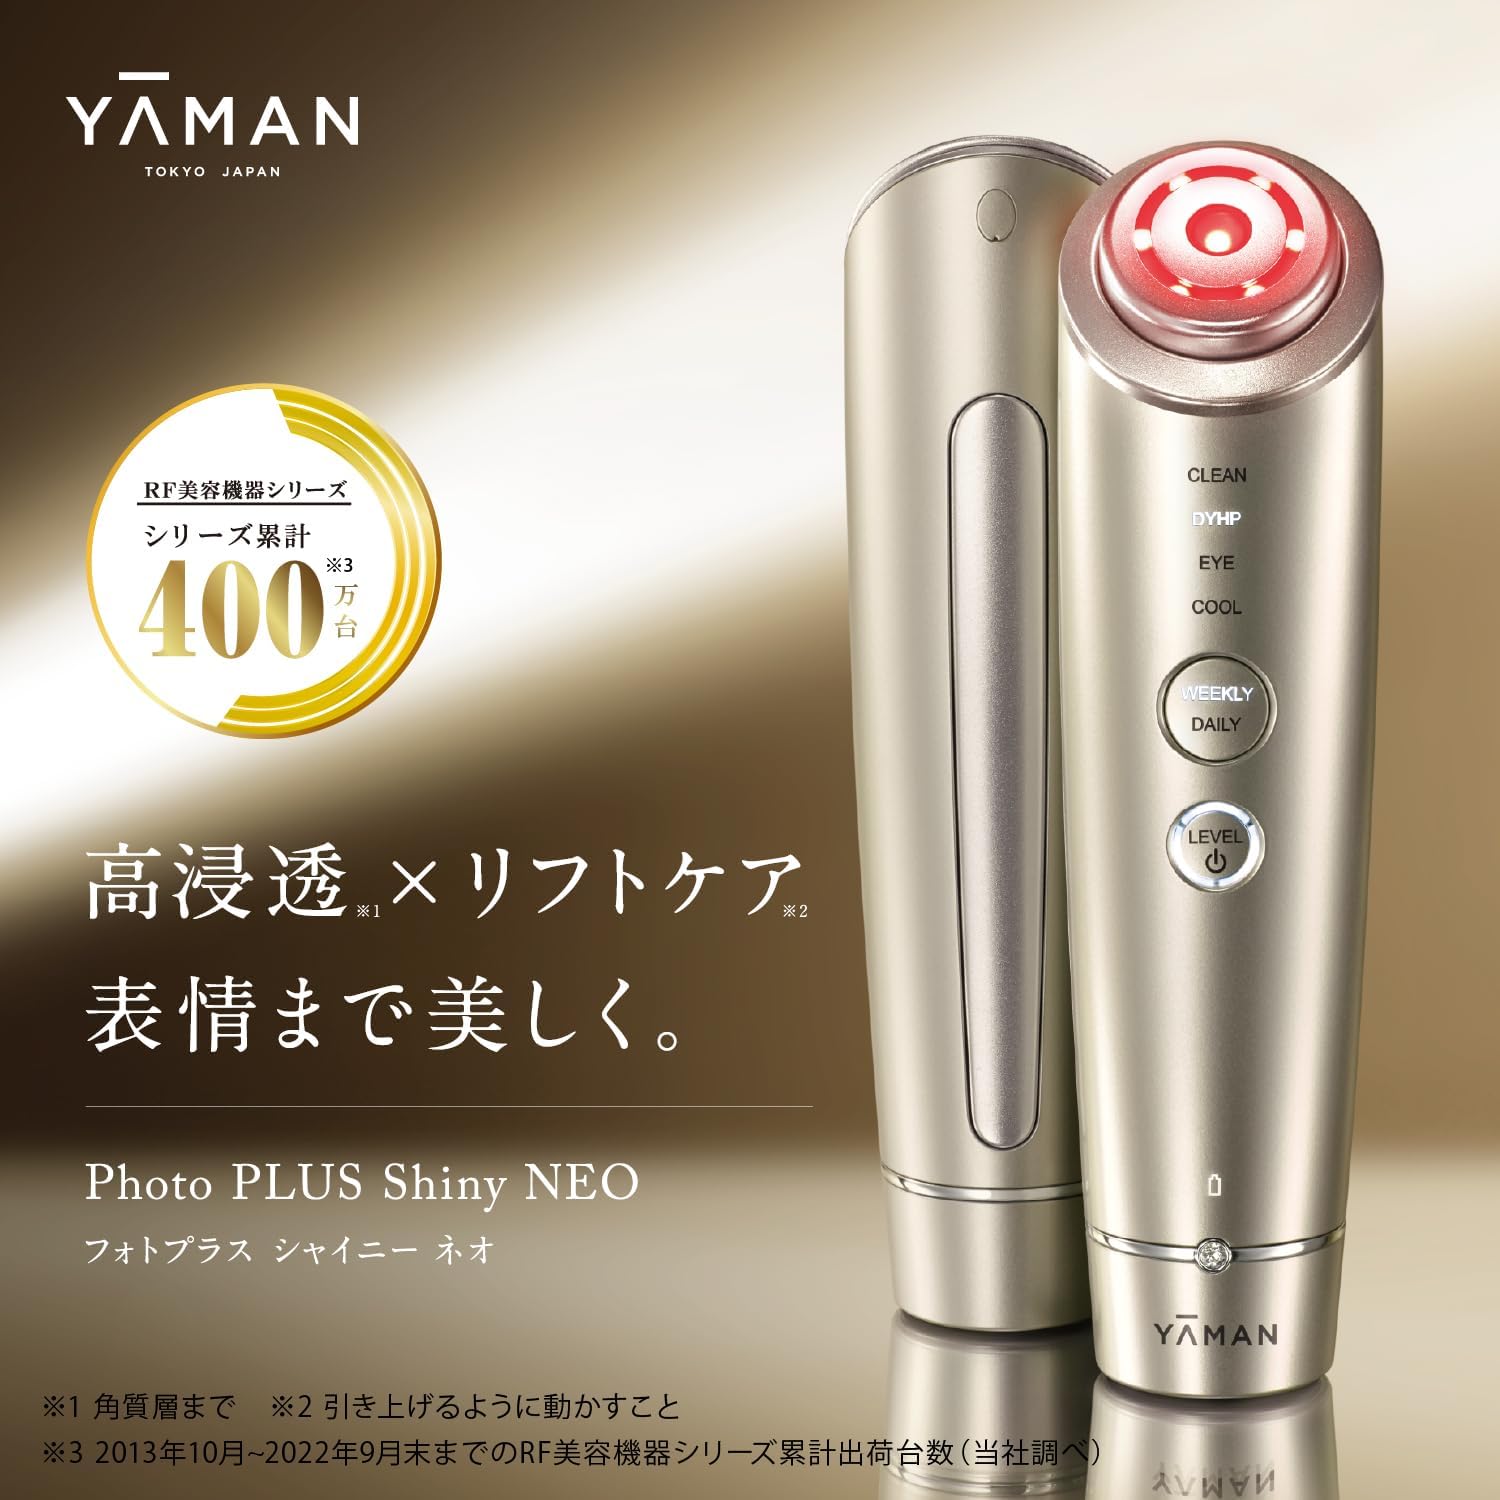 YA-MAN RF facial device Photoplus Shiny Neo Gold YJFM18N 